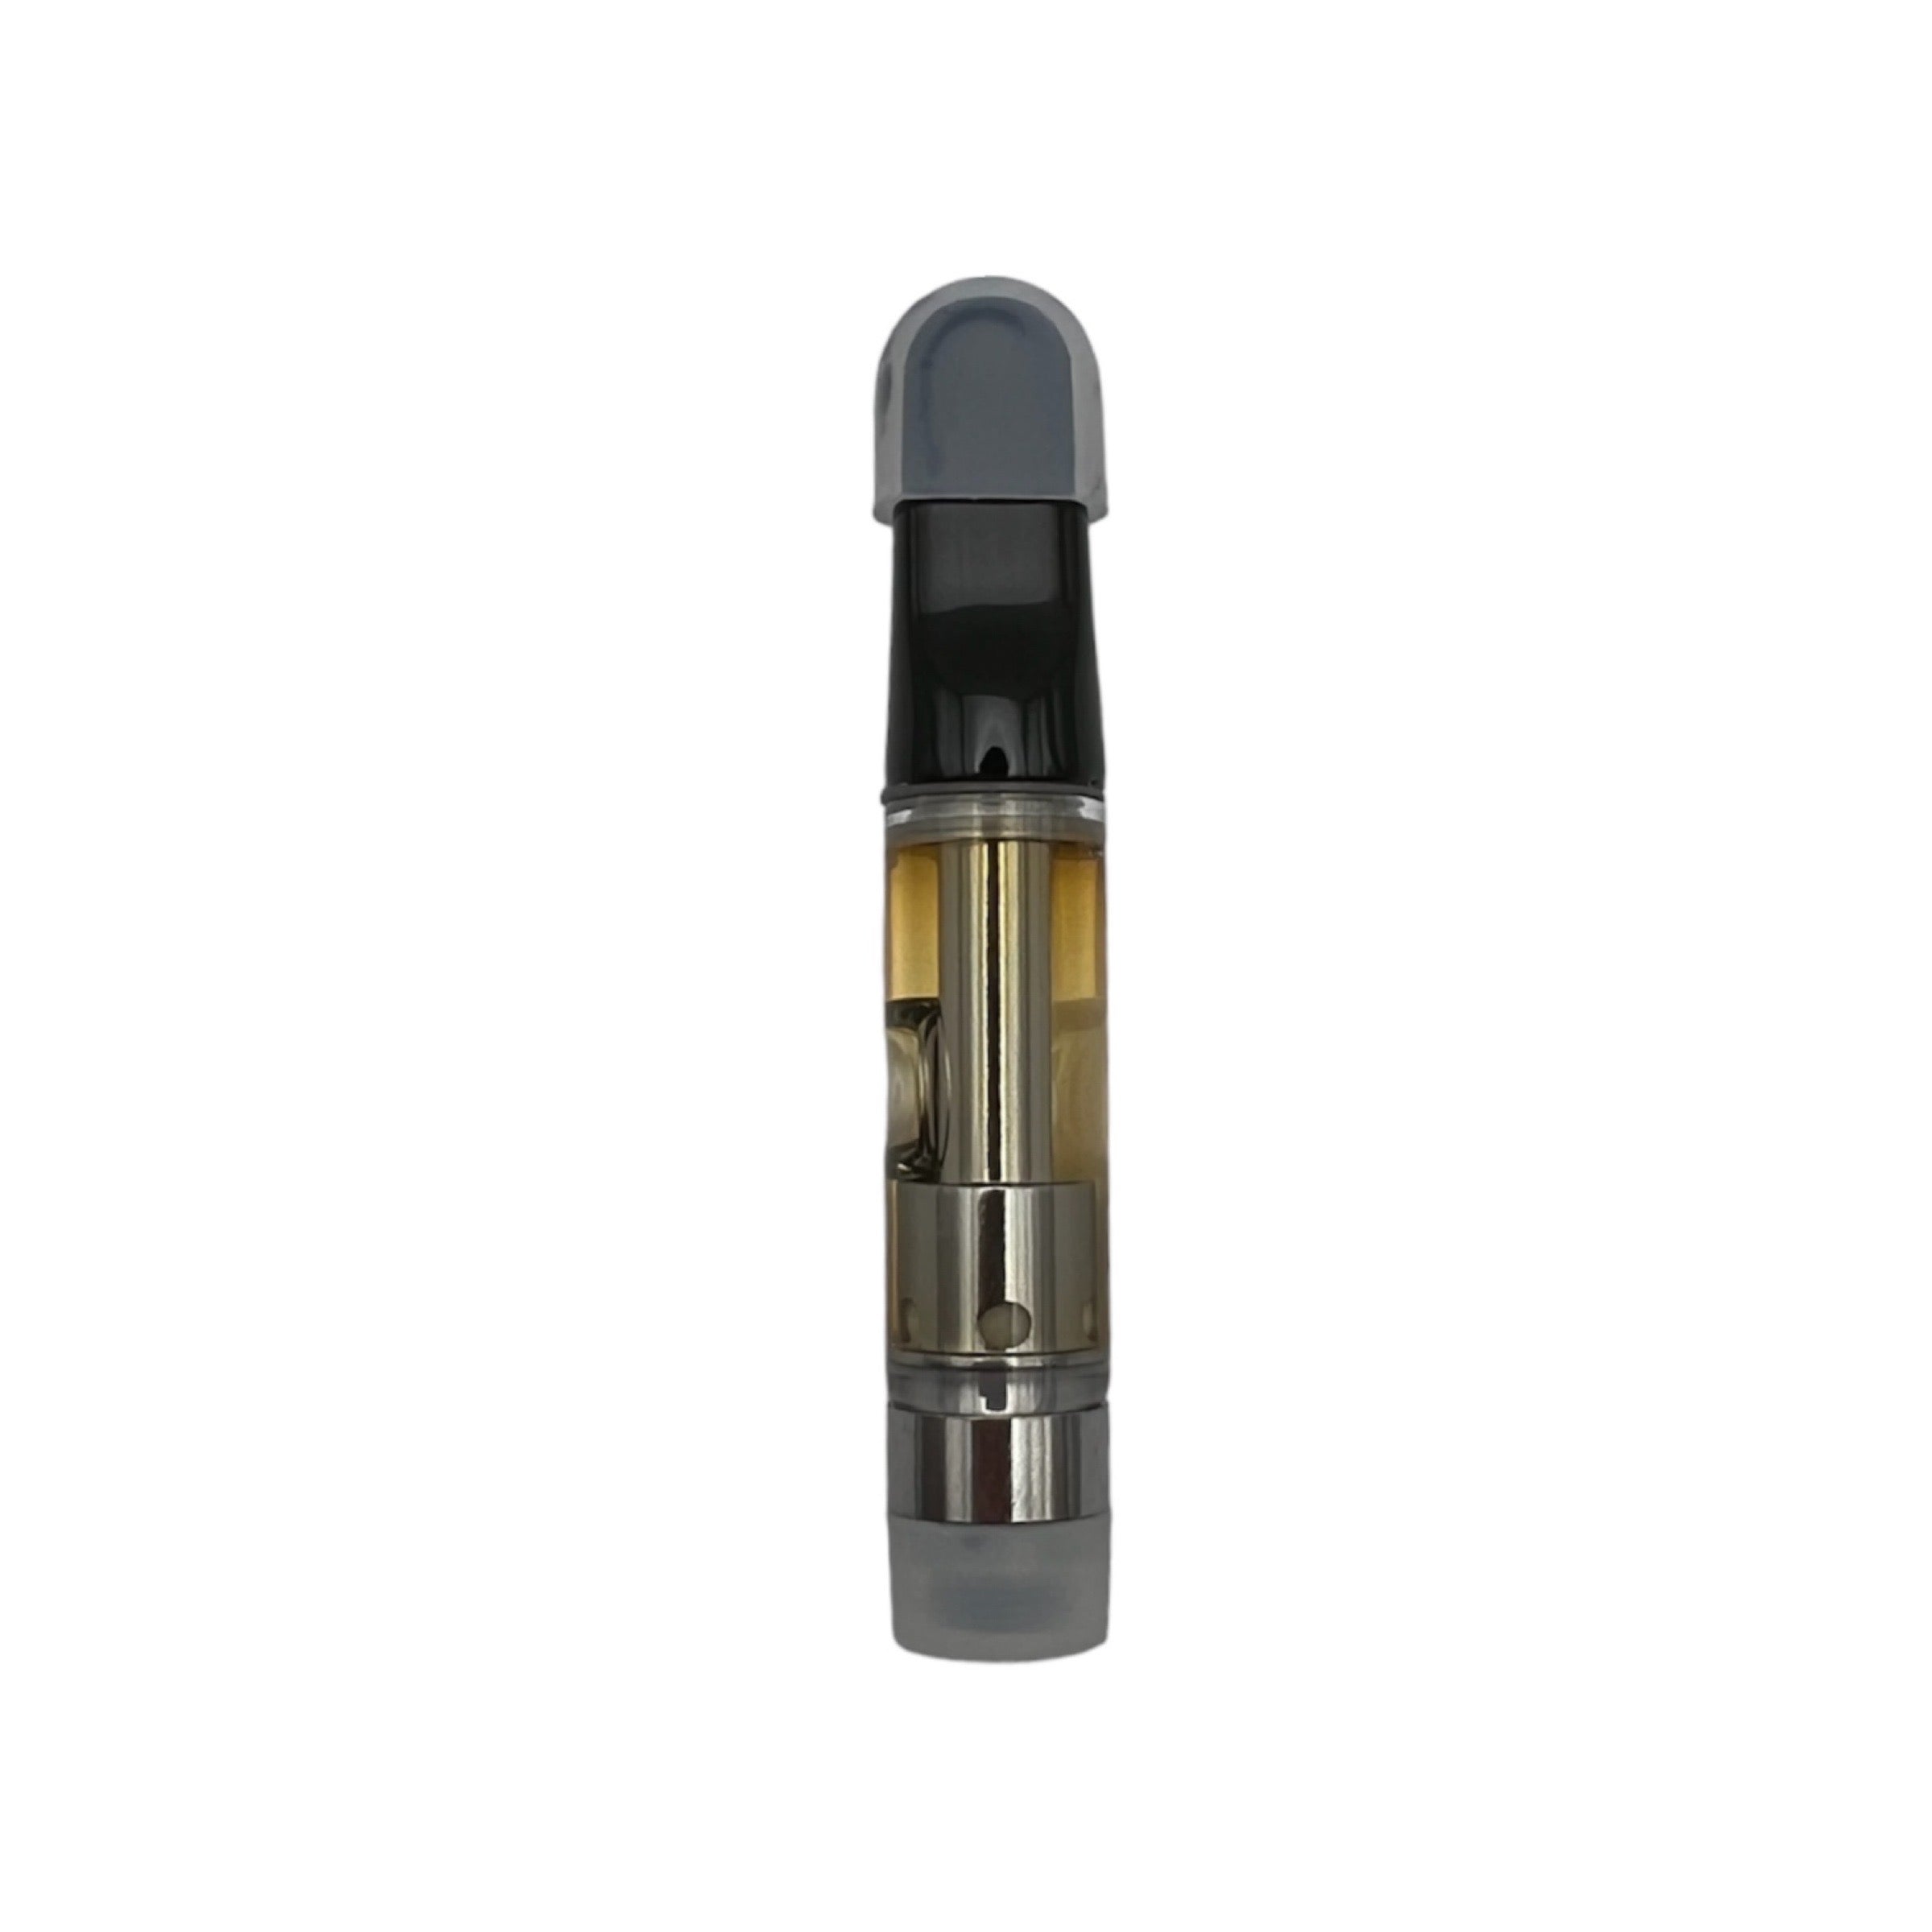 KroMood Cartridge (Dab Pen) of HHC - Amnesia - 95% HHC/1000MG - 600 puffs